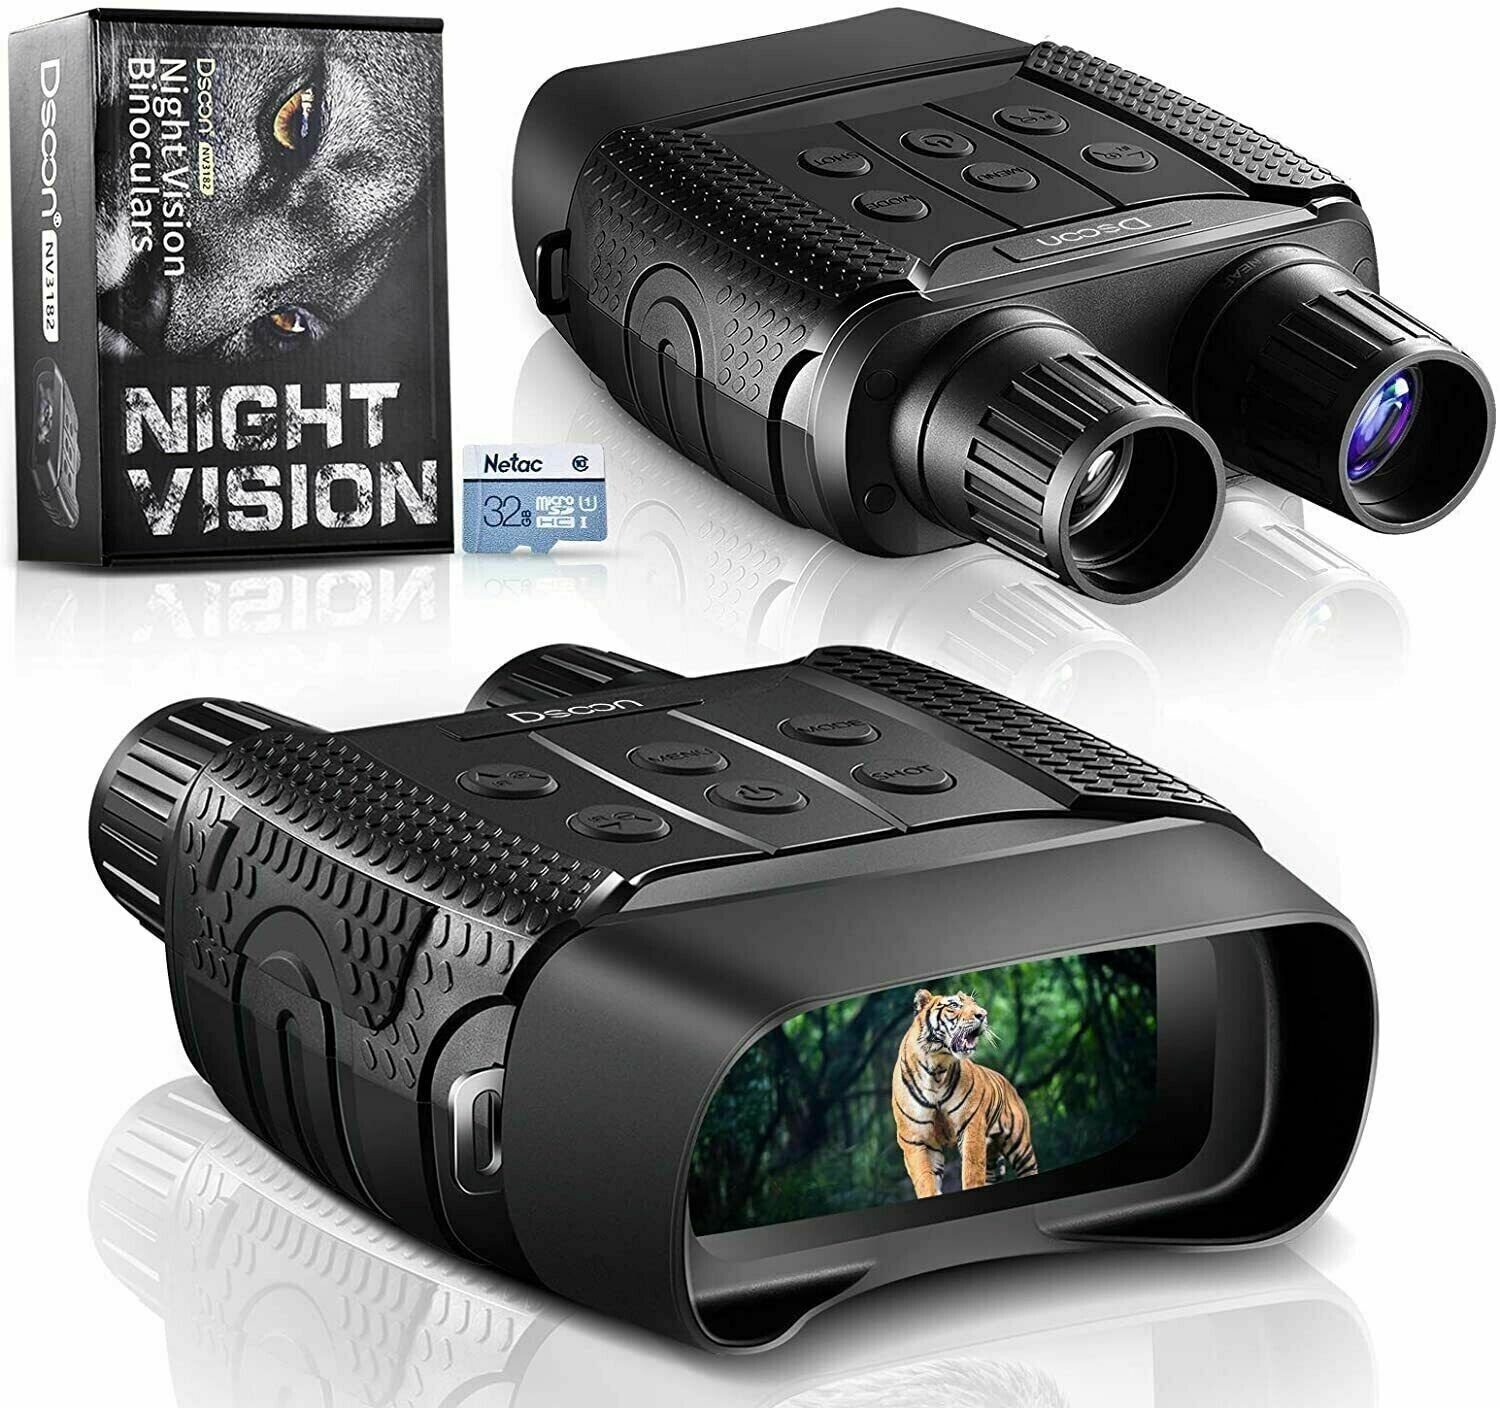 Night Vision & Day Binoculars for Hunting in 100% Darkness, Digital Infrared 32G